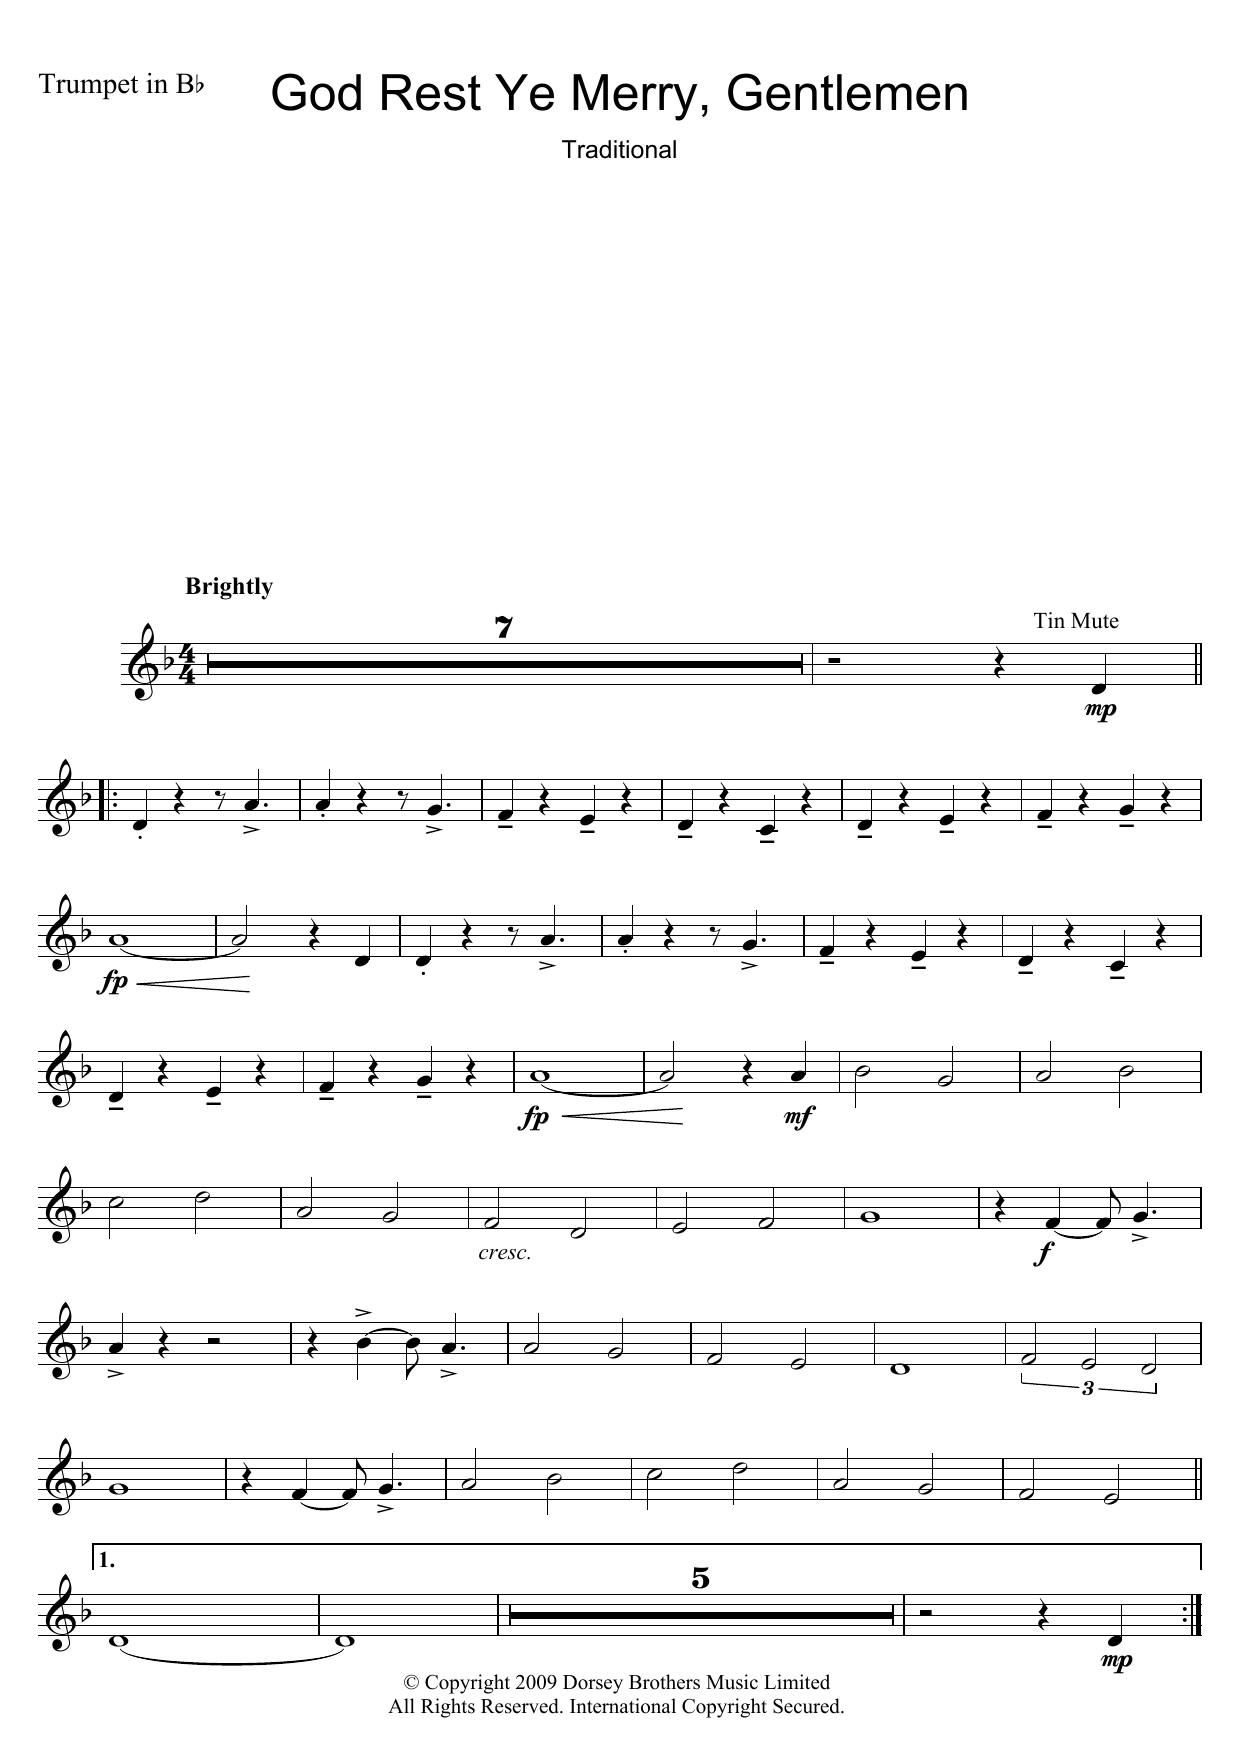 Traditional Carol God Rest Ye Merry, Gentlemen Sheet Music Notes & Chords for Violin - Download or Print PDF